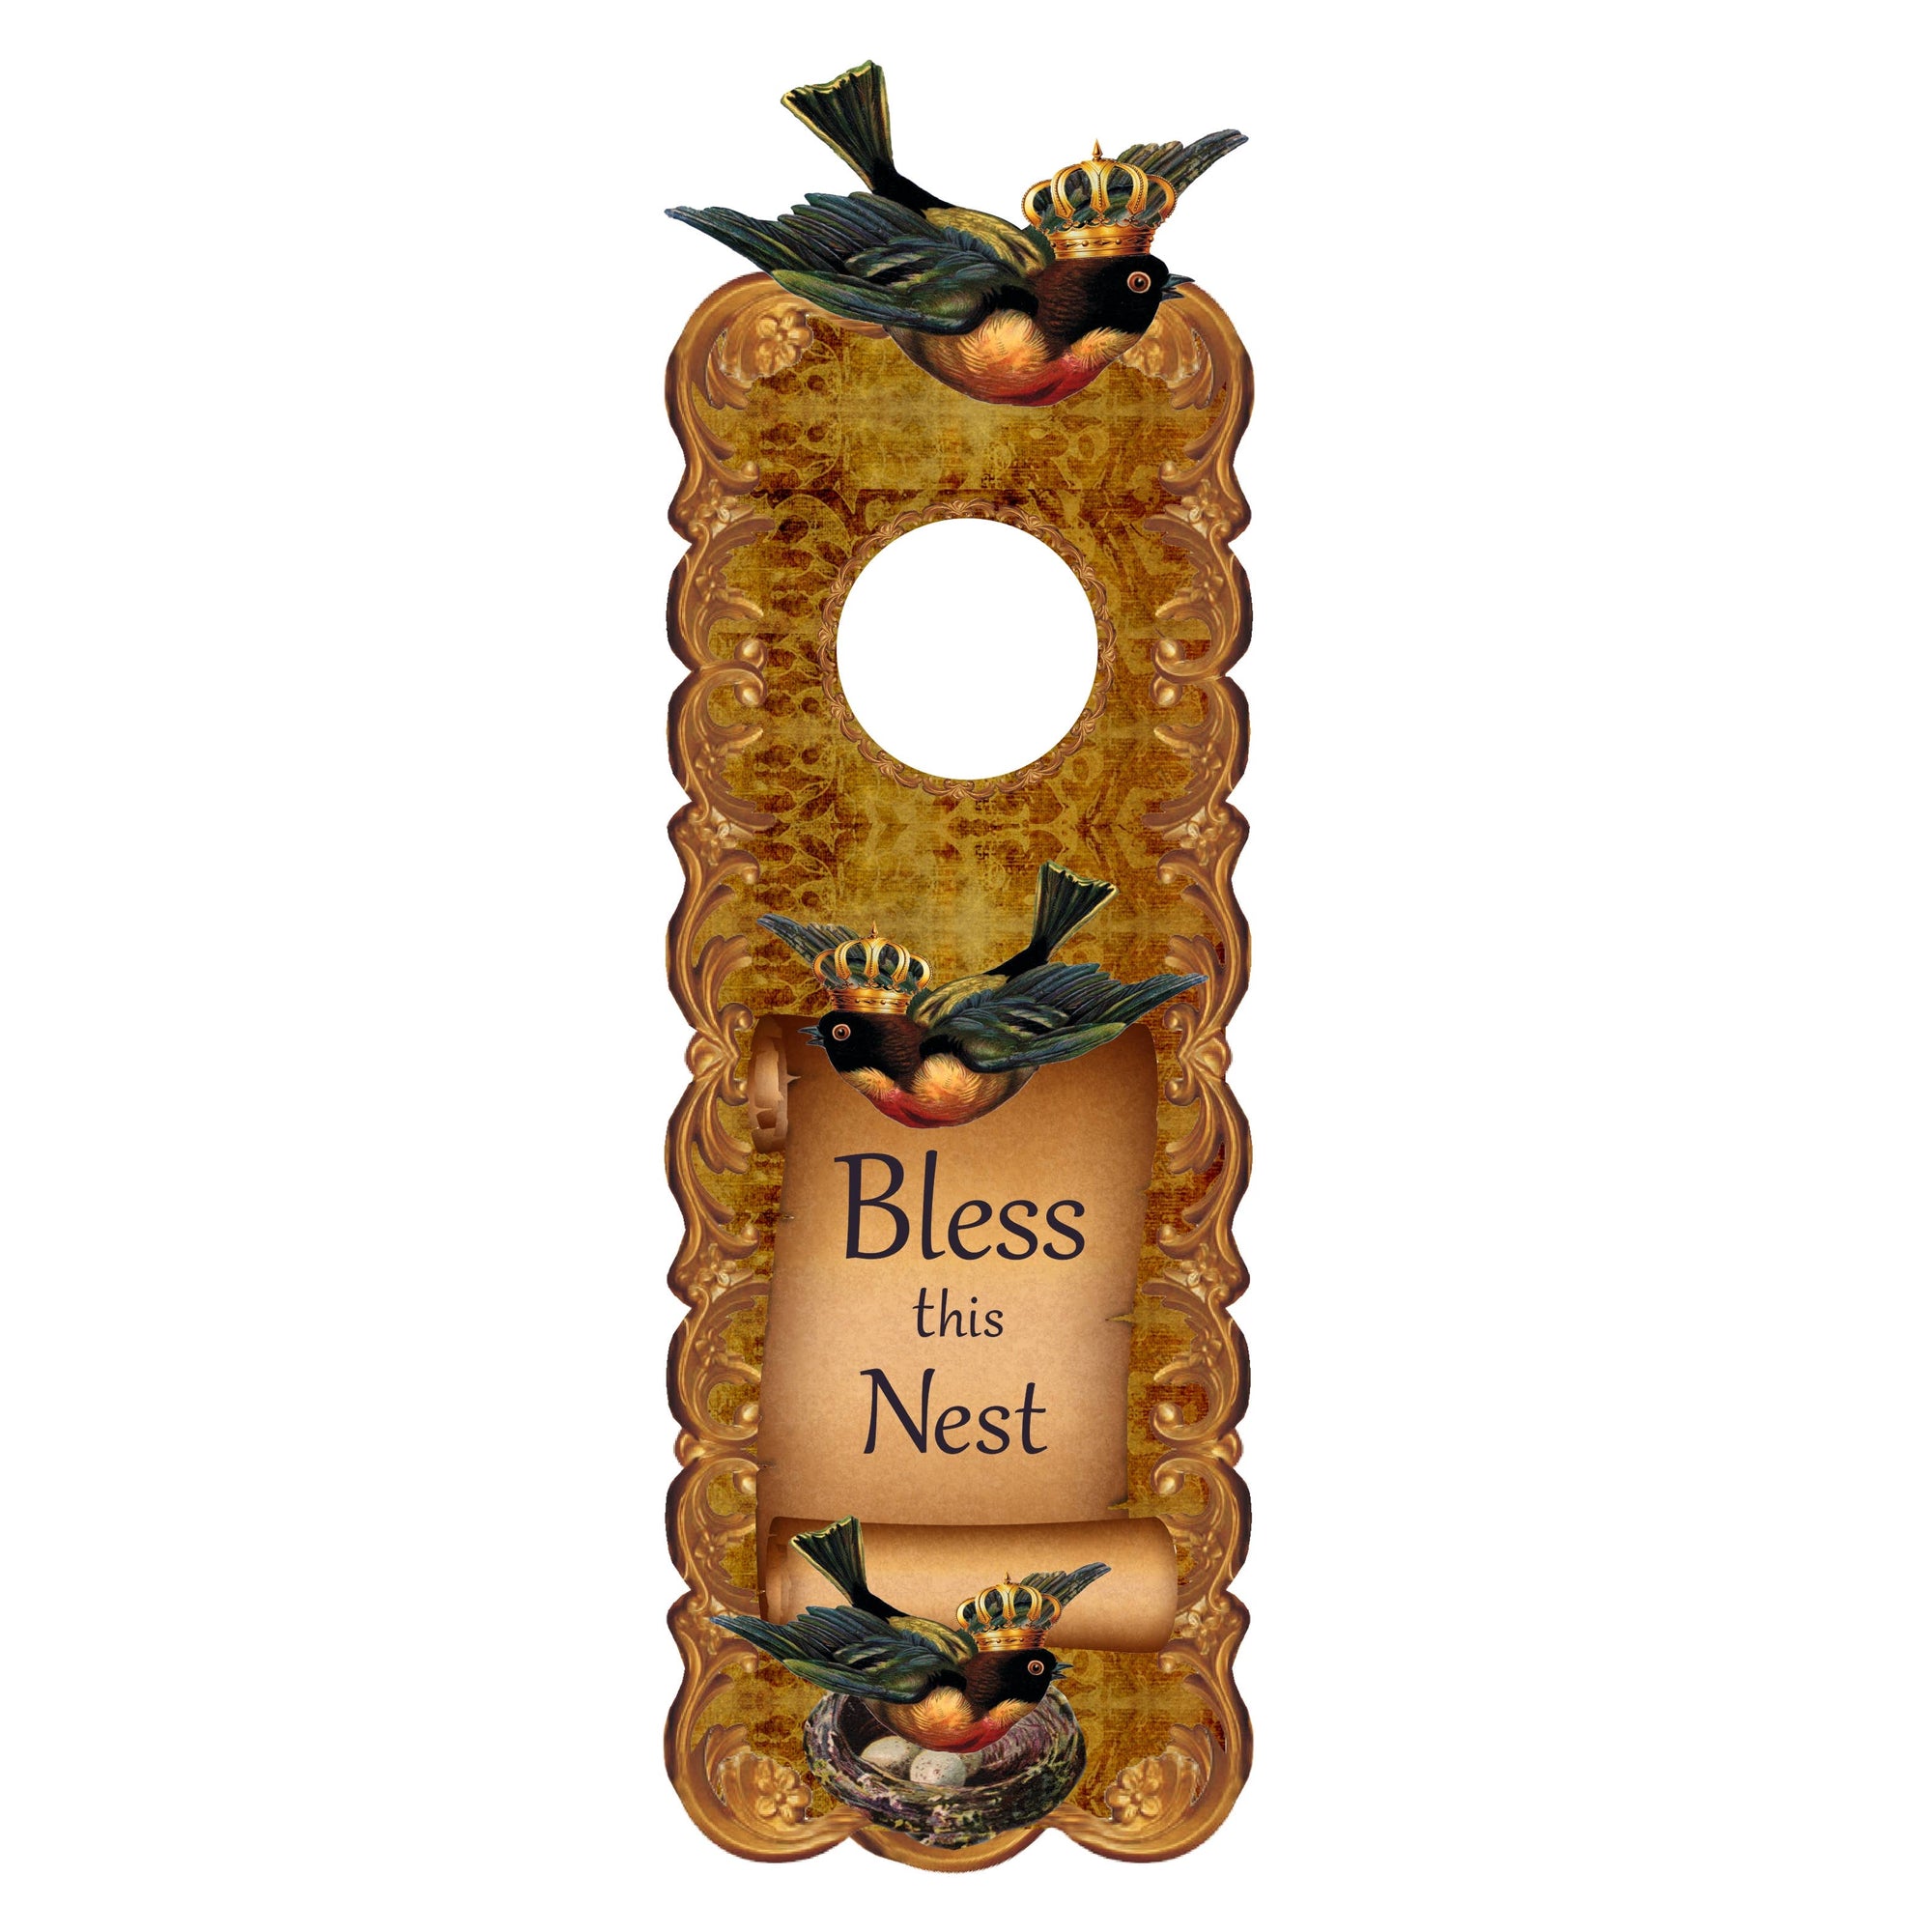 Heart The Moment - Doorknob Hanger - Bless This Nest